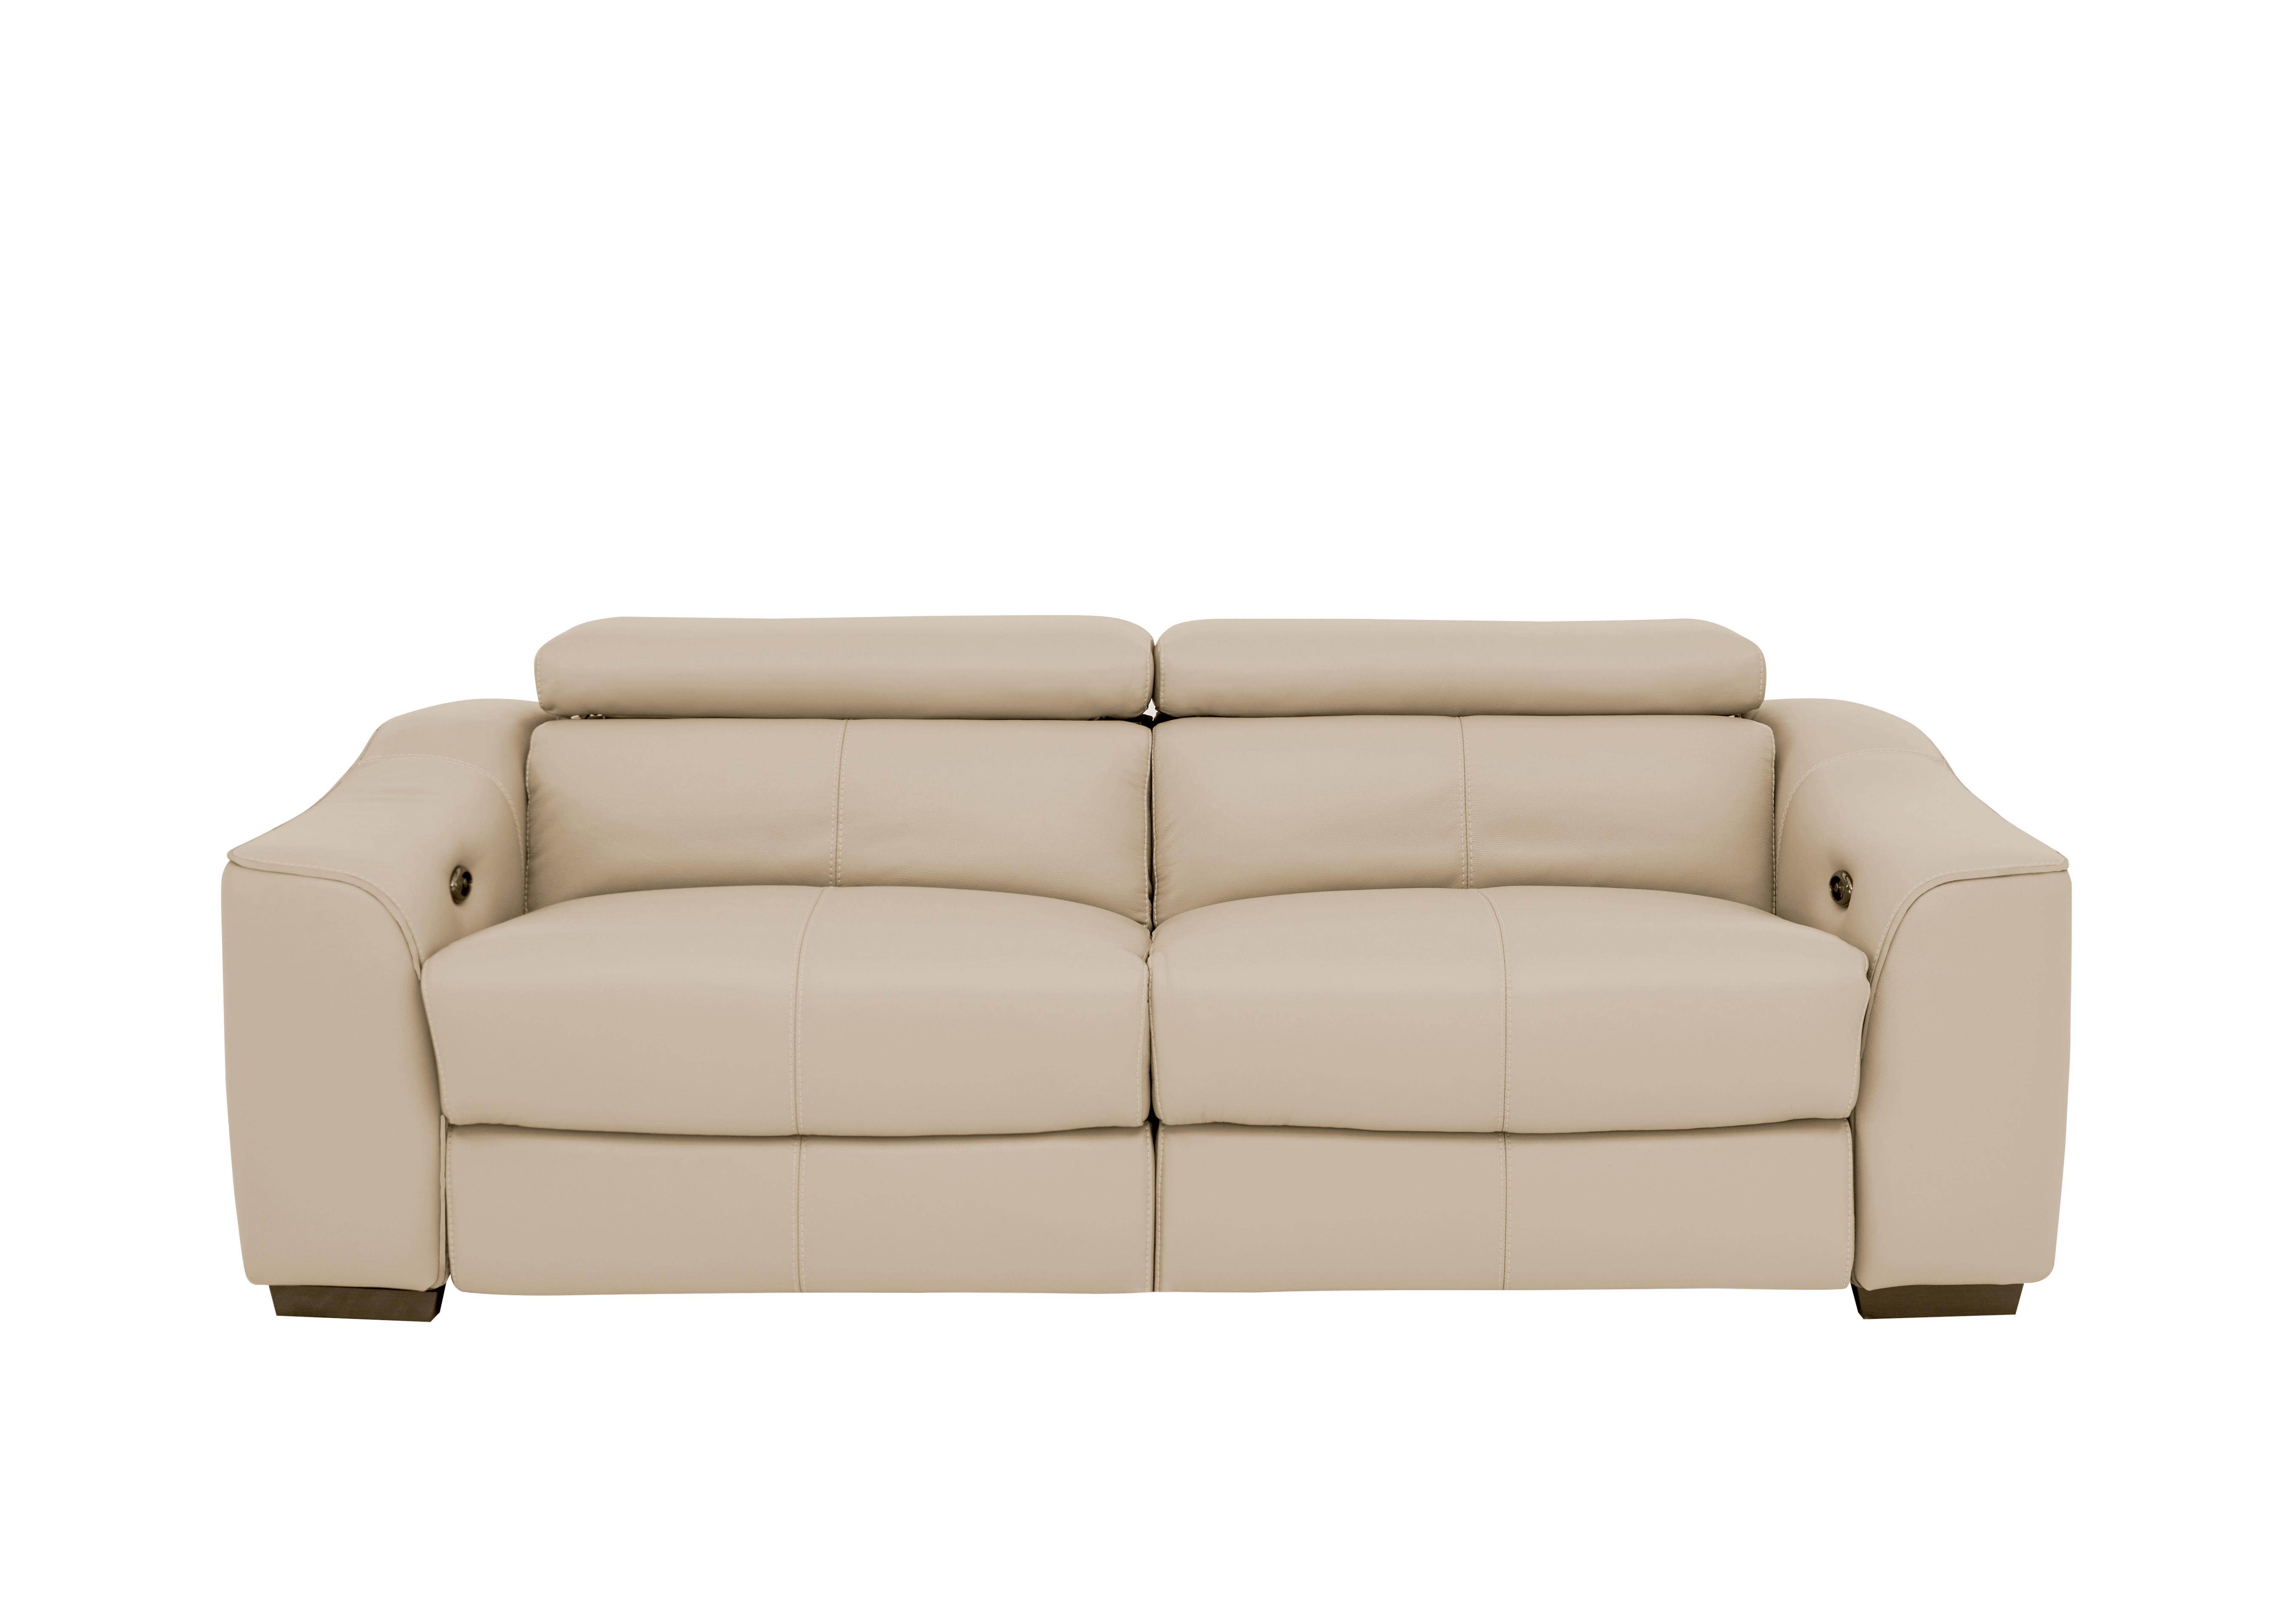 Elixir 3 Seater Leather Sofa in Bv-039c Pebble on Furniture Village